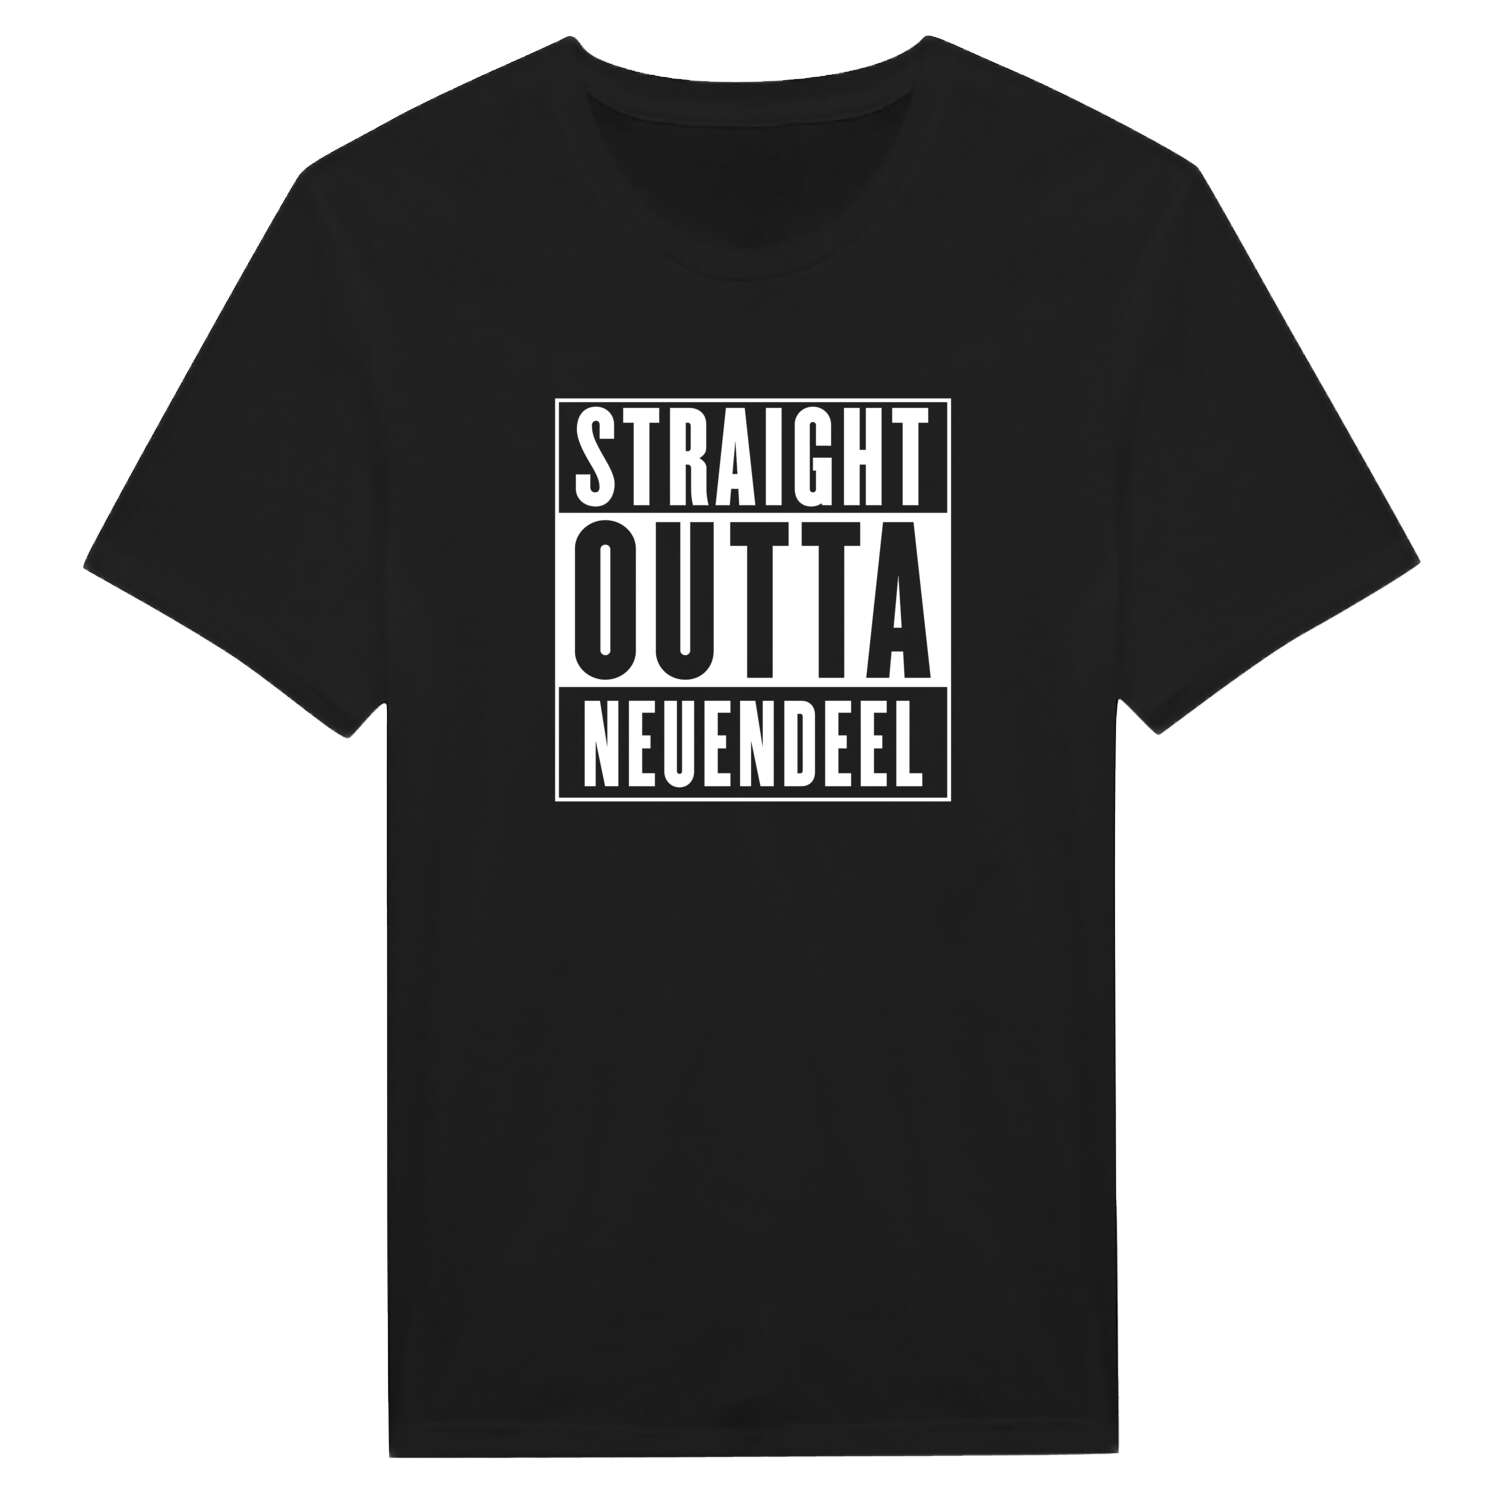 Neuendeel T-Shirt »Straight Outta«